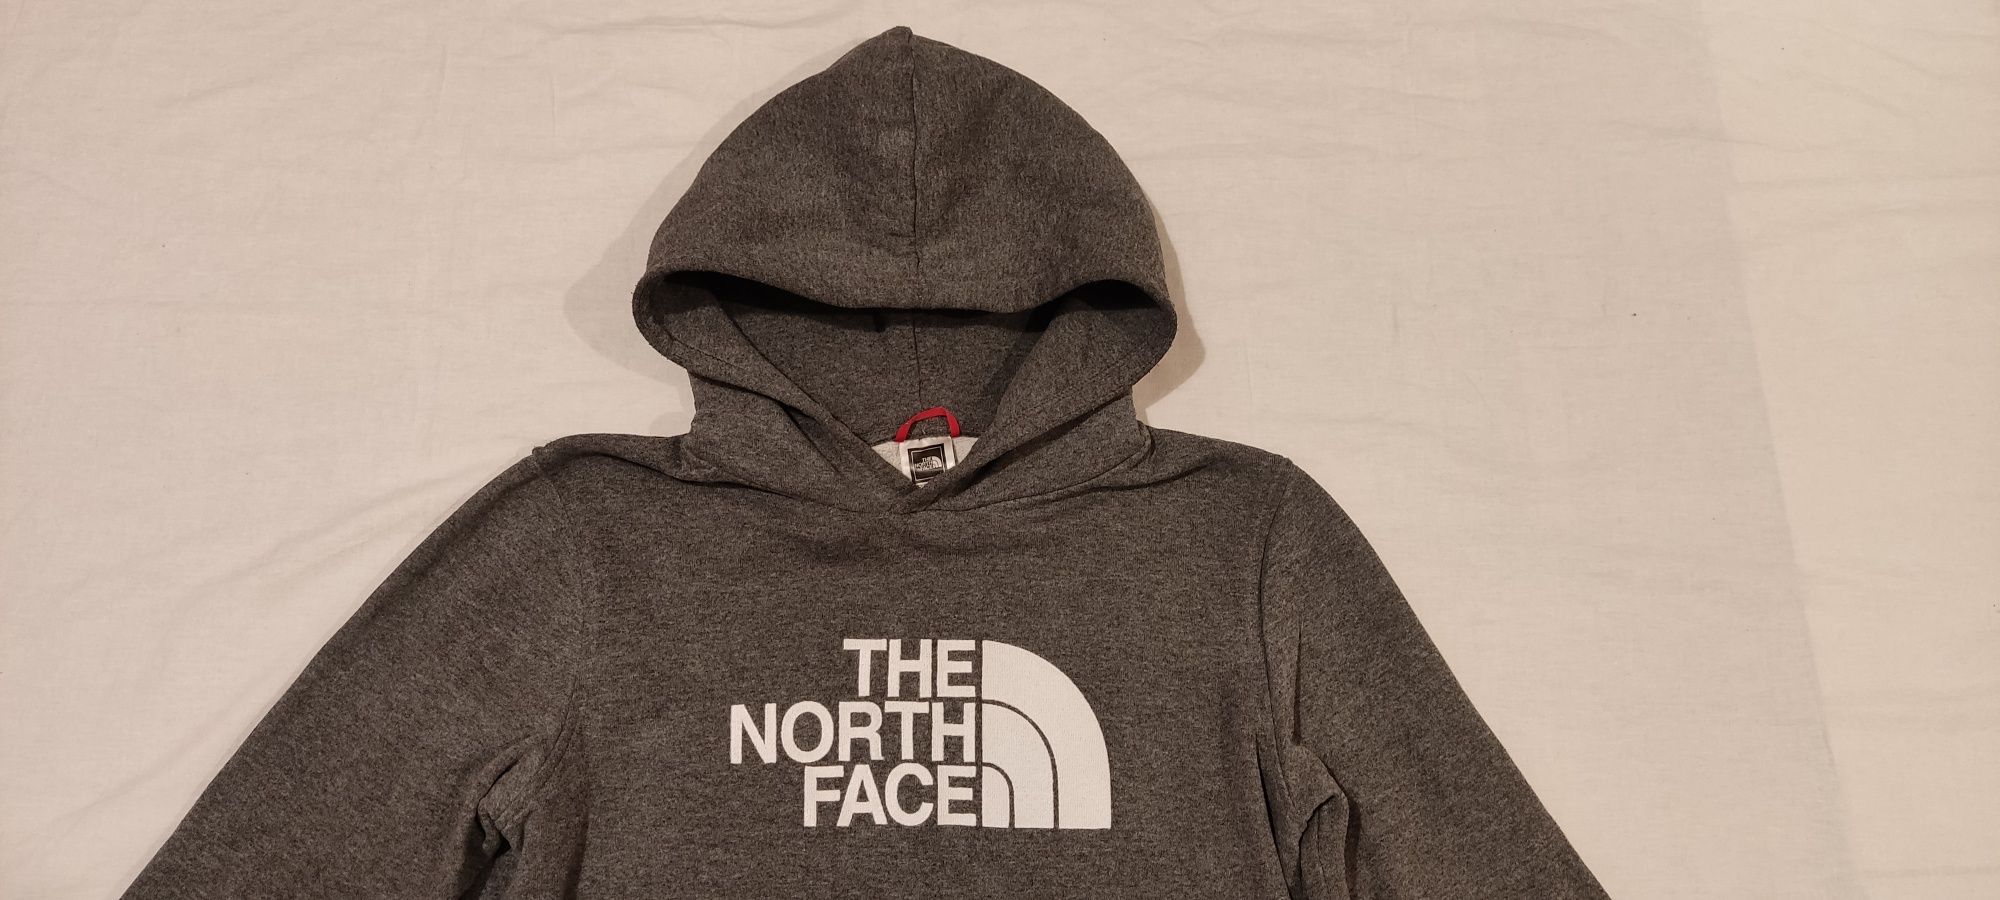 Hanorac The North Face mărime XL junior copii gluga bluza